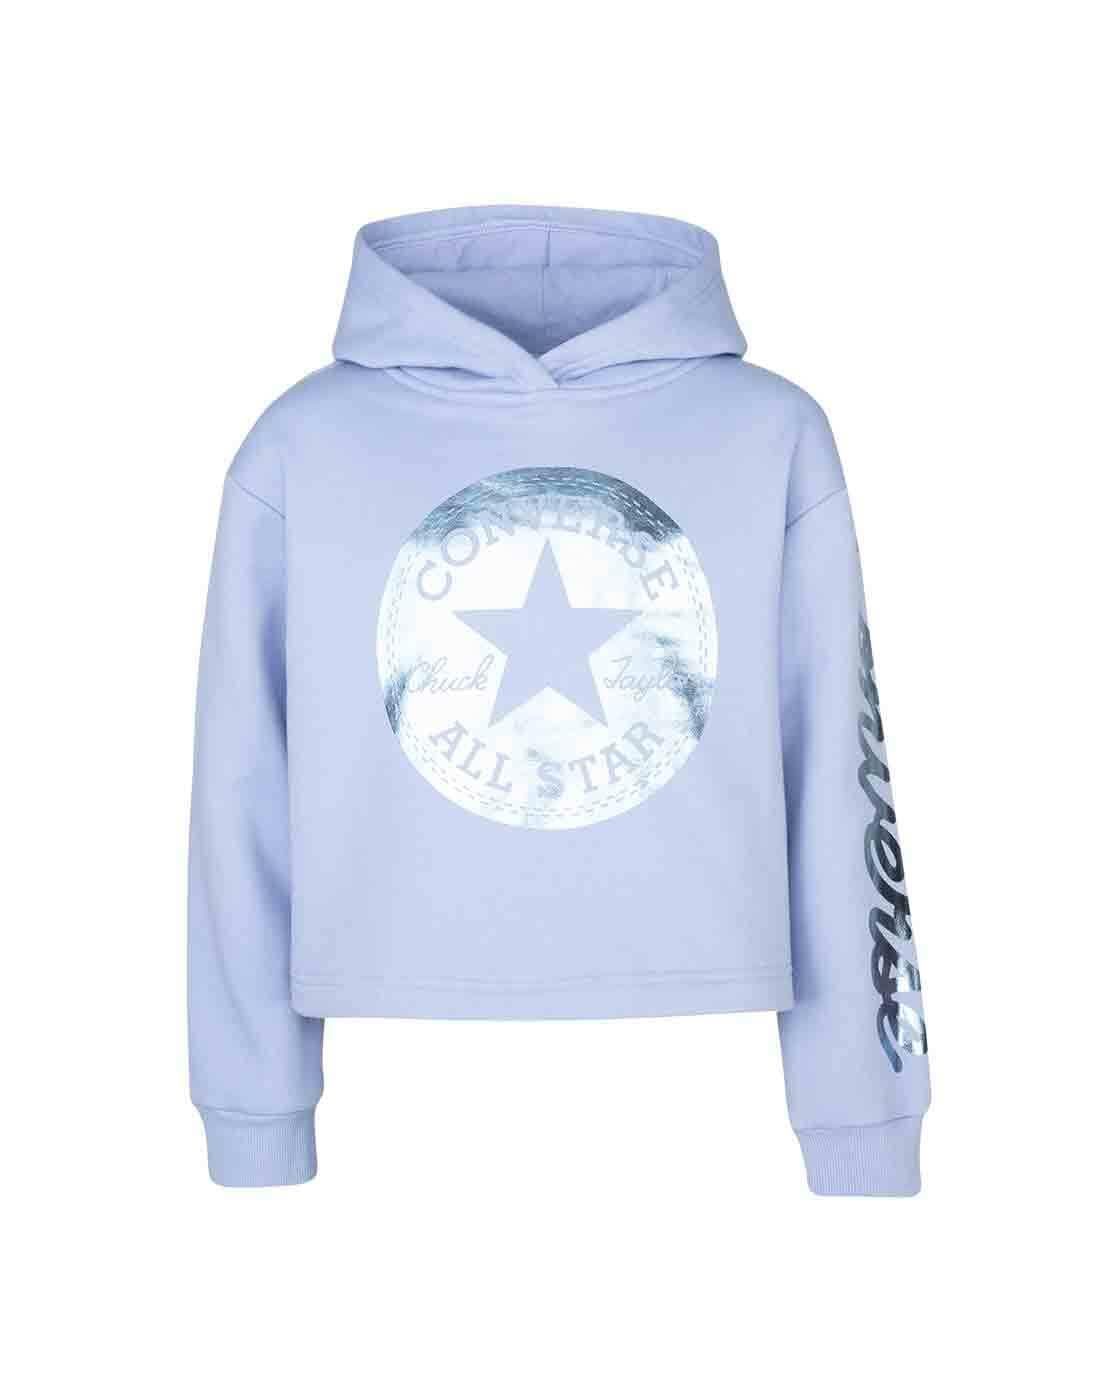 Buy Blue Sweatshirts & Hoodie for Girls by CONVERSE Online 